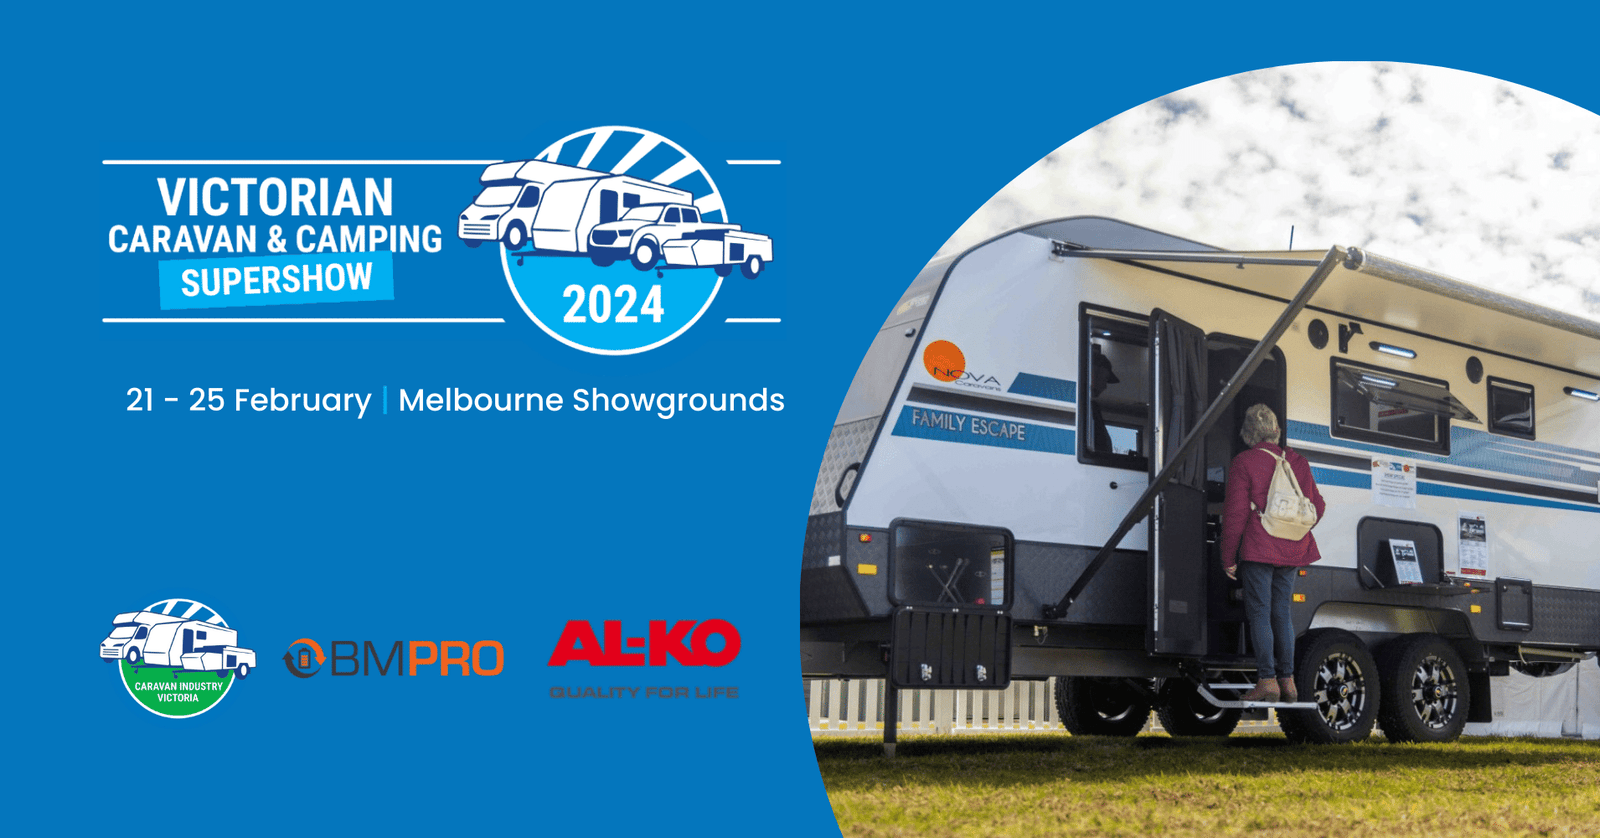 The 2024 Victorian Caravan & Camping Supershow